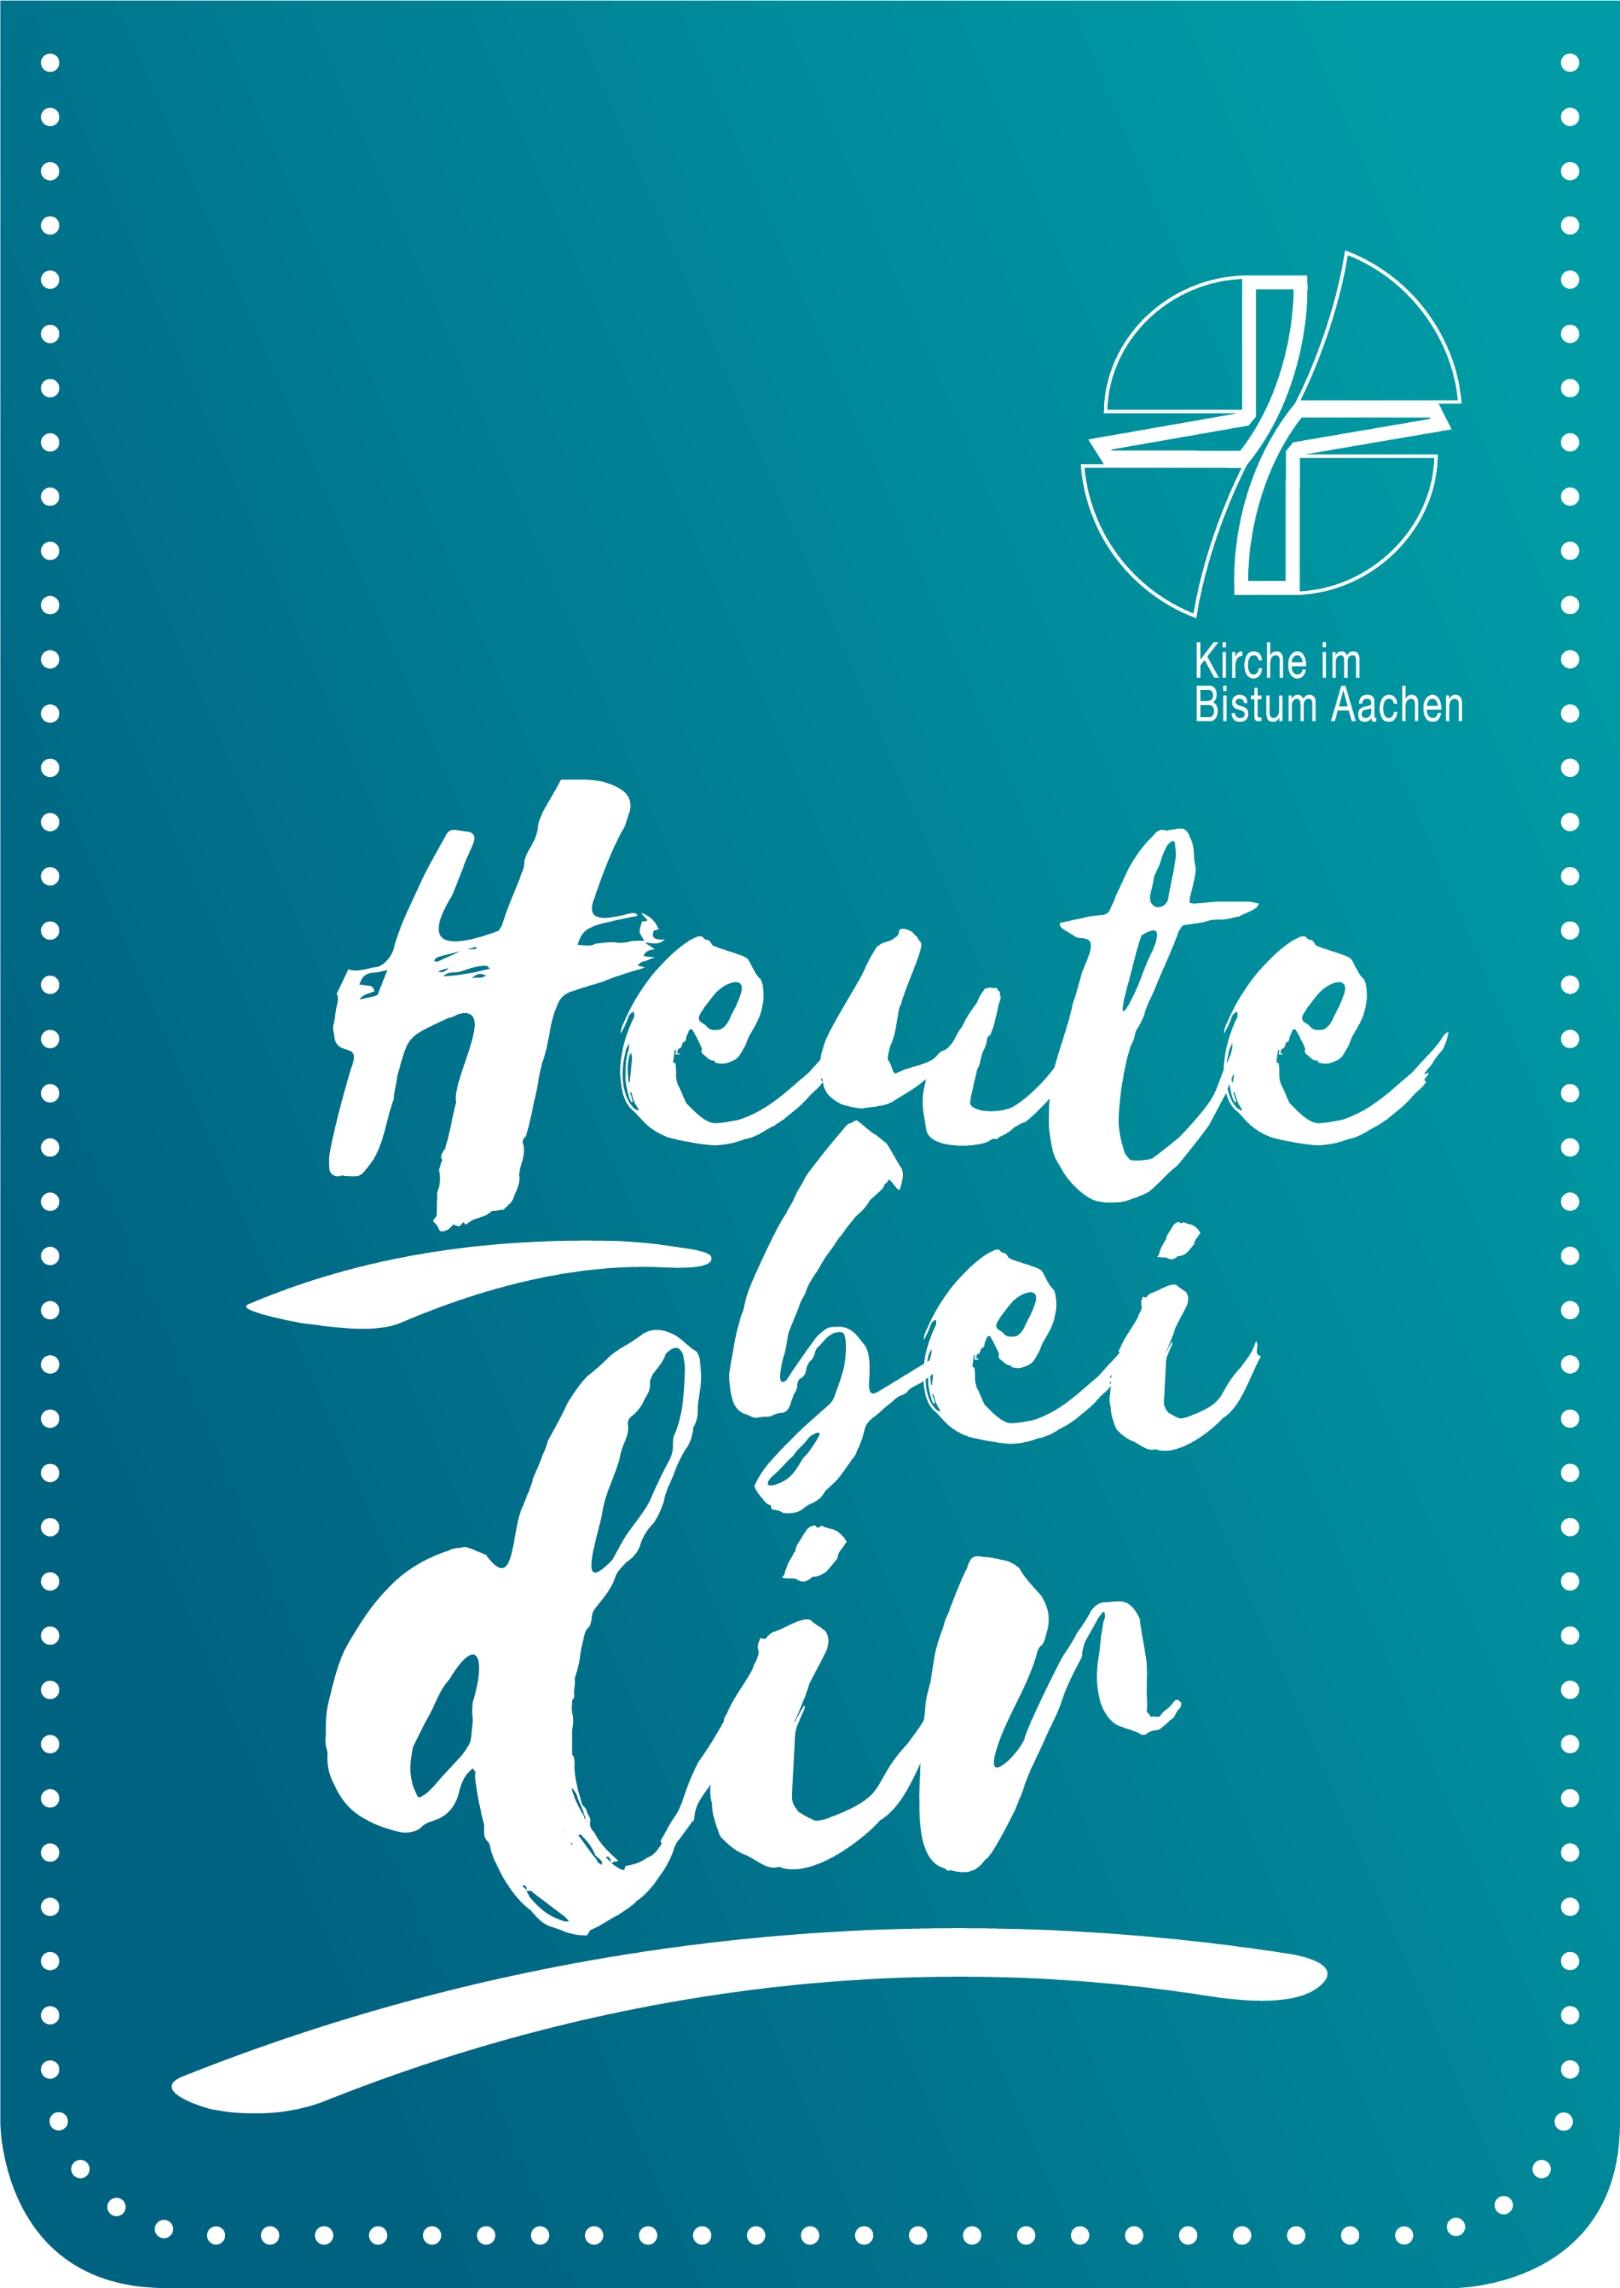 Logo Heute bei dir (c) Bistum Aachen